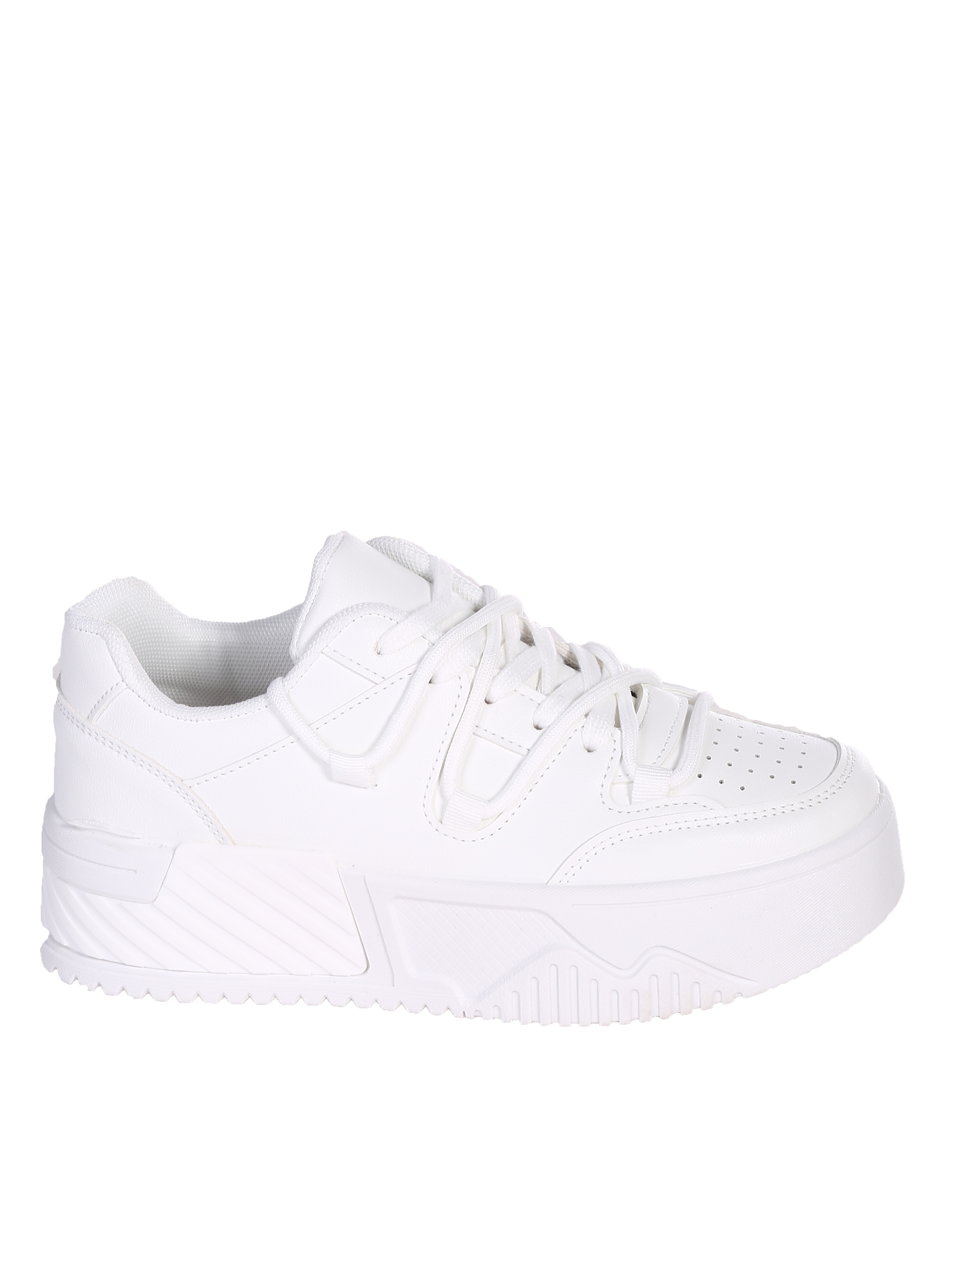 Ежедневни дамски обувки на платформа в бяло 3U-24072 all white